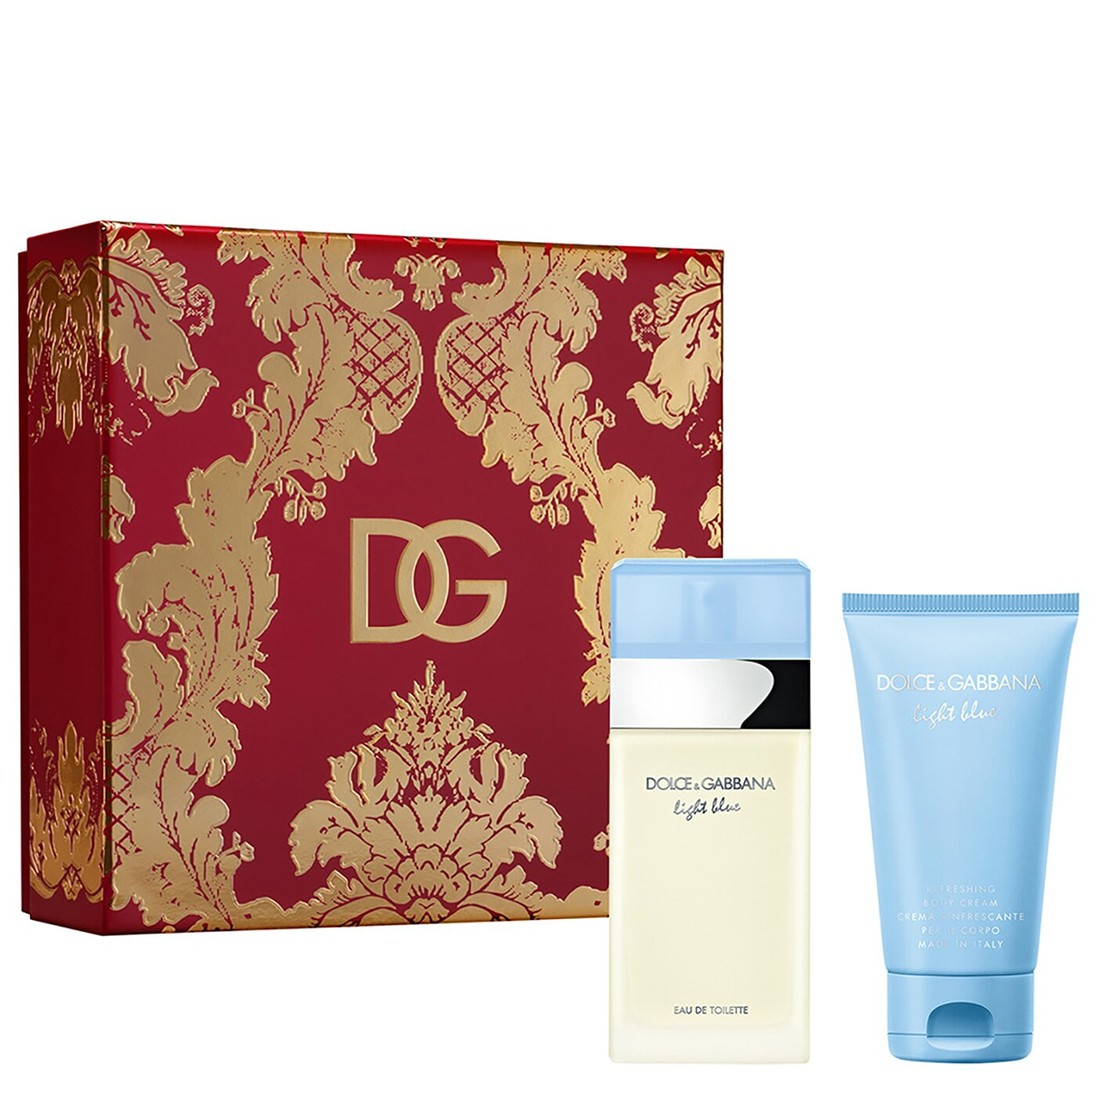 Dolce & Gabbana Light Blue Cofanetto Donna Eau de Toilette -  profumomaniaforever